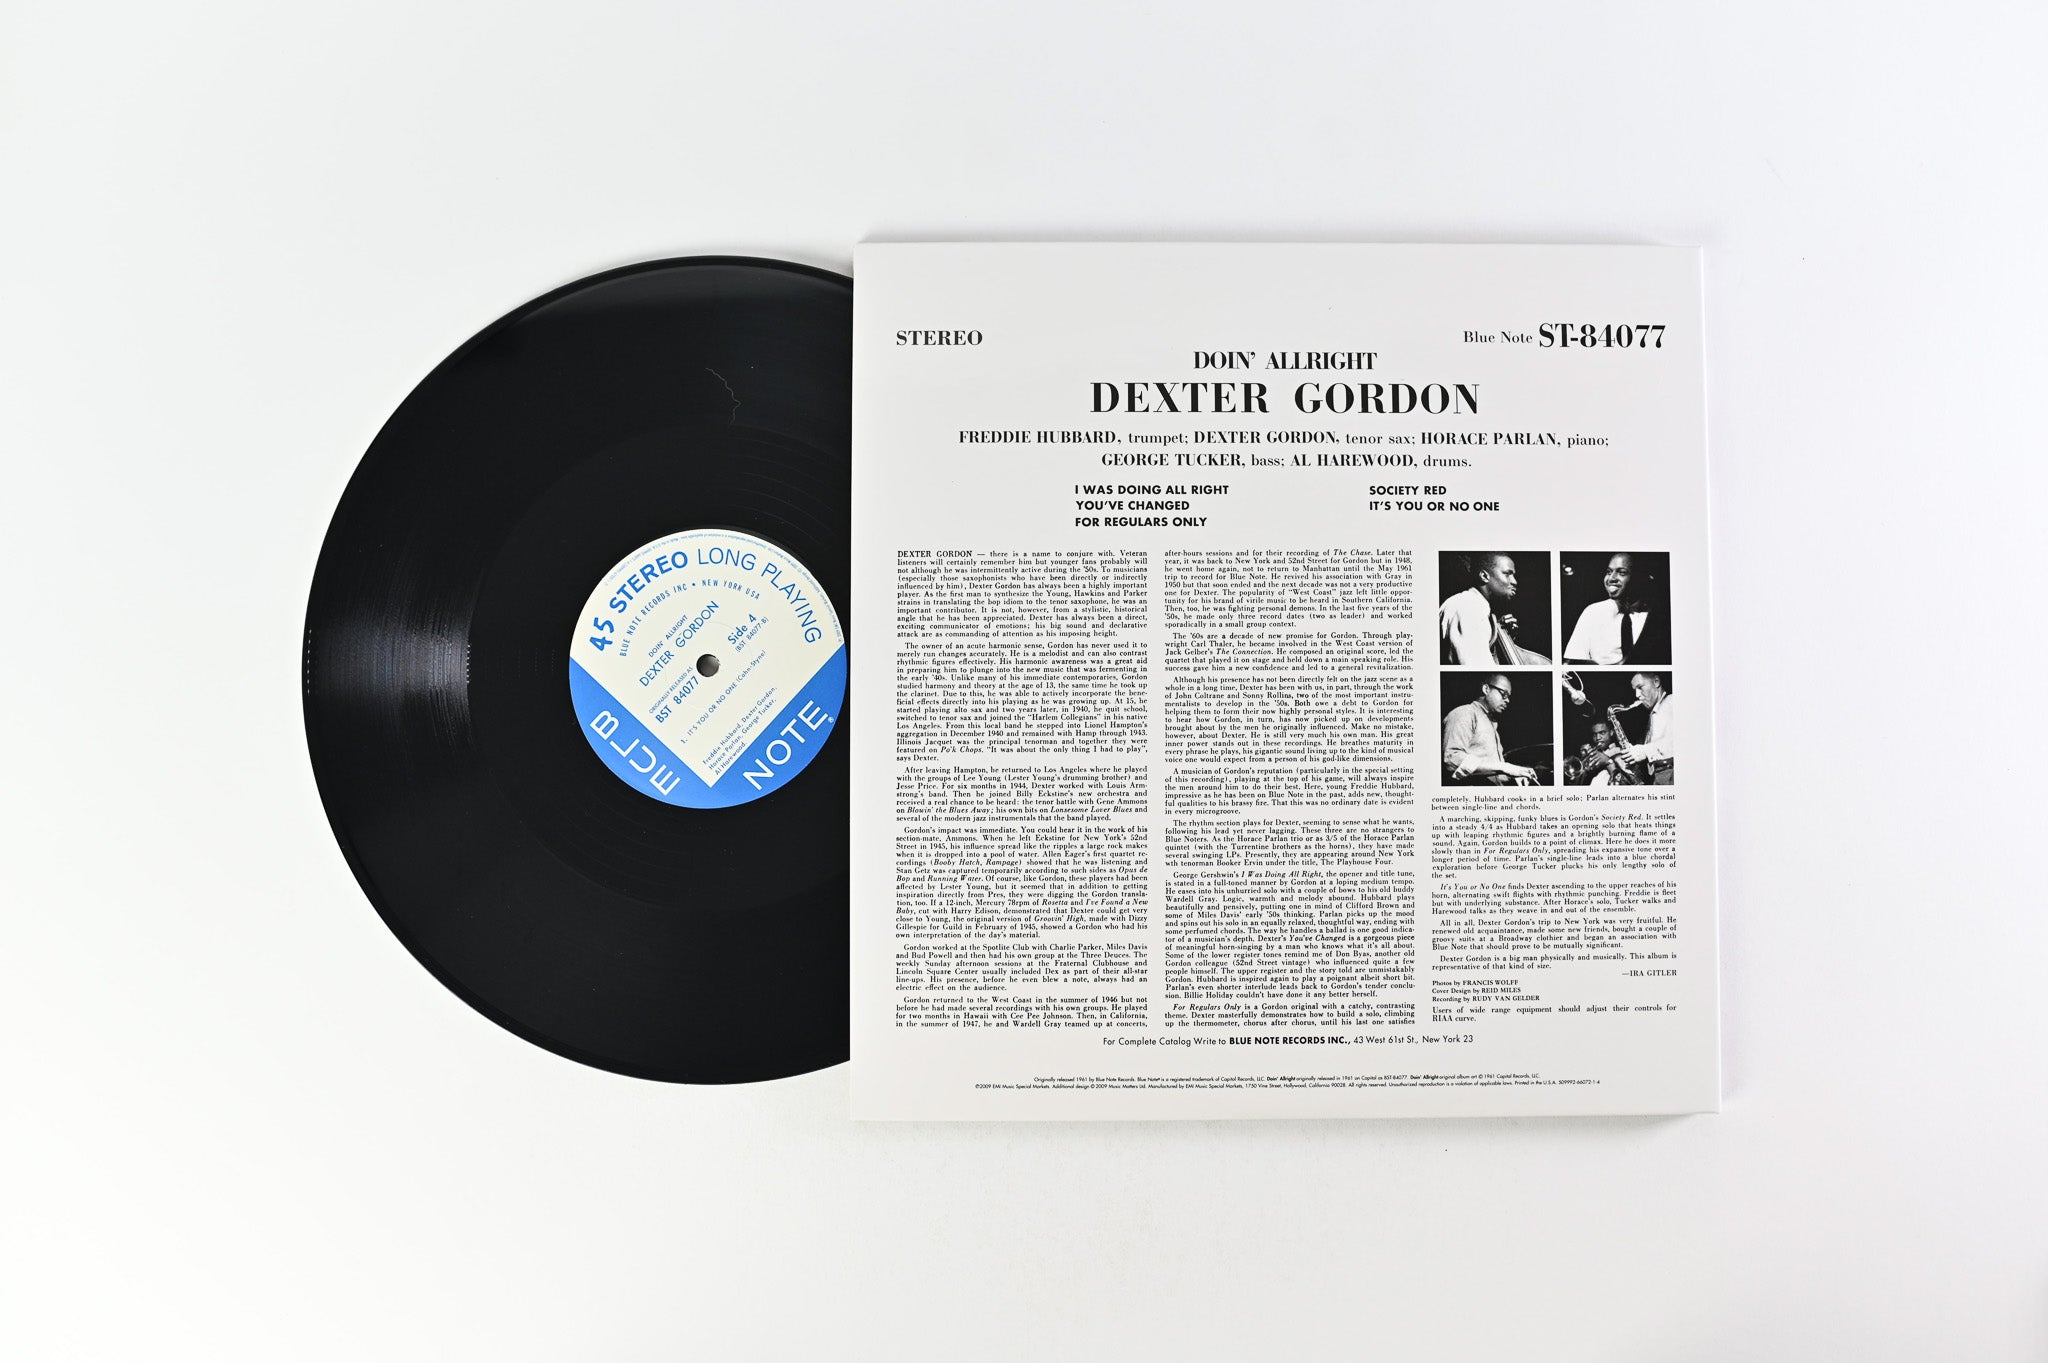 Dexter Gordon - Doin' Allright on Blue Note Music Matters 45 RPM Reissue